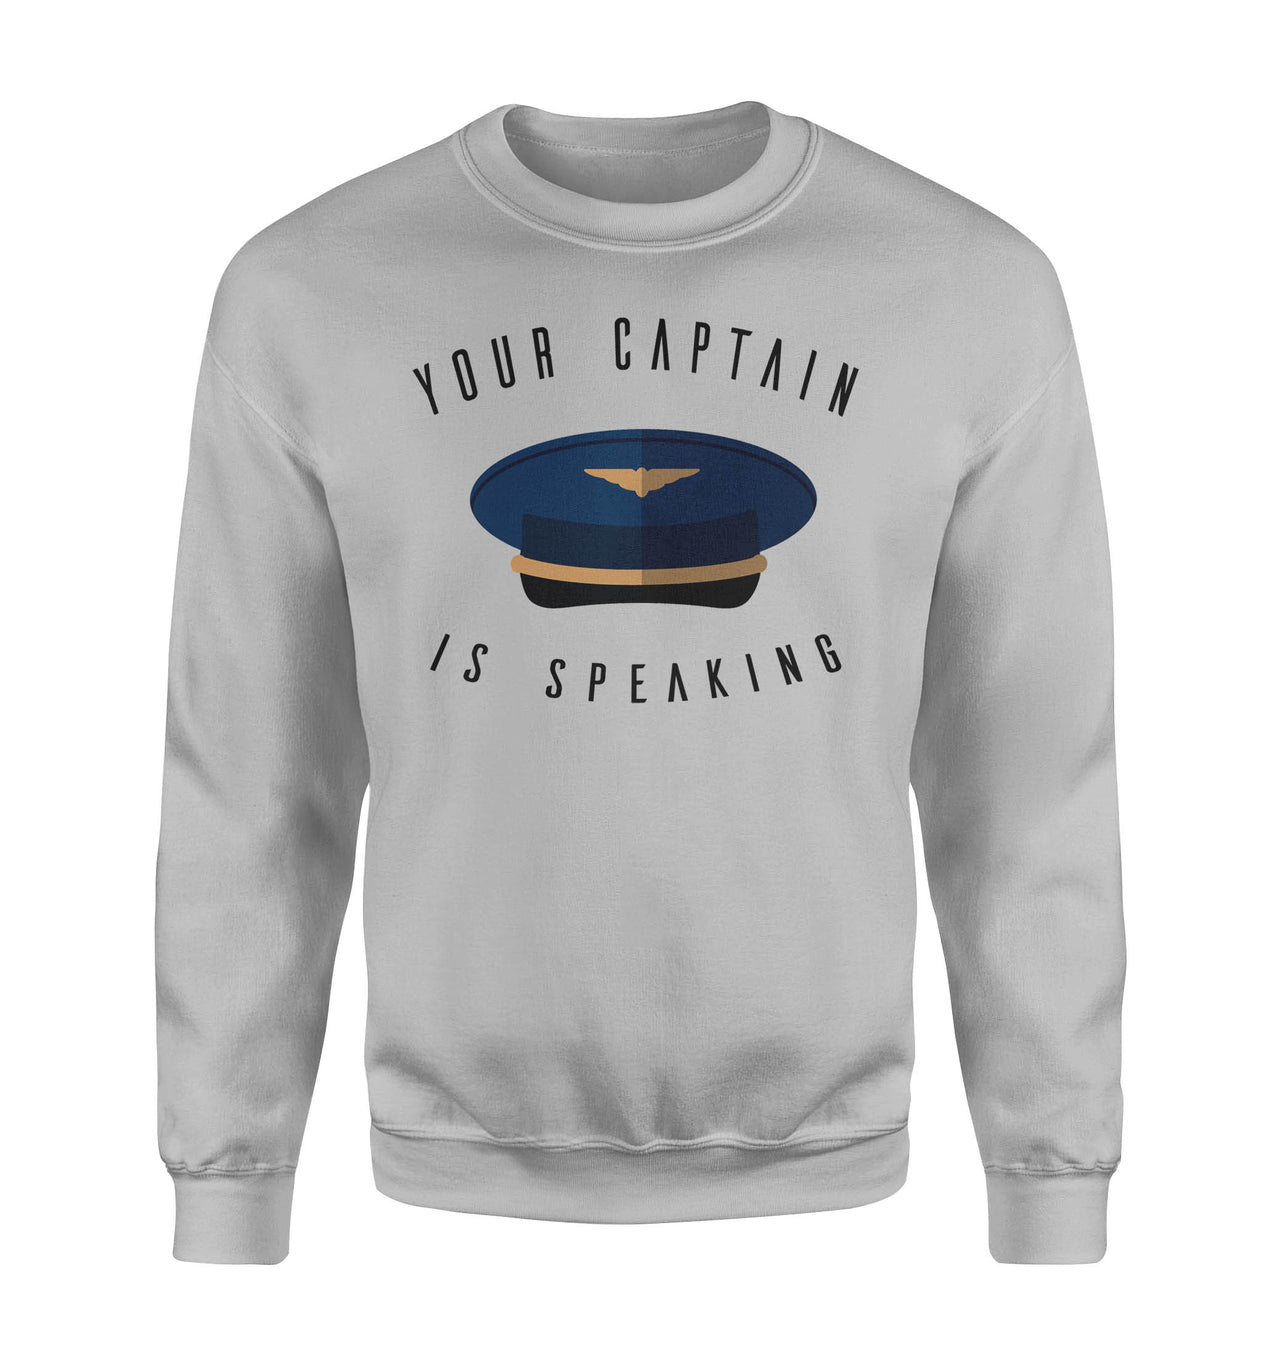 Your Captain Is Speaking Designed Sweatshirts